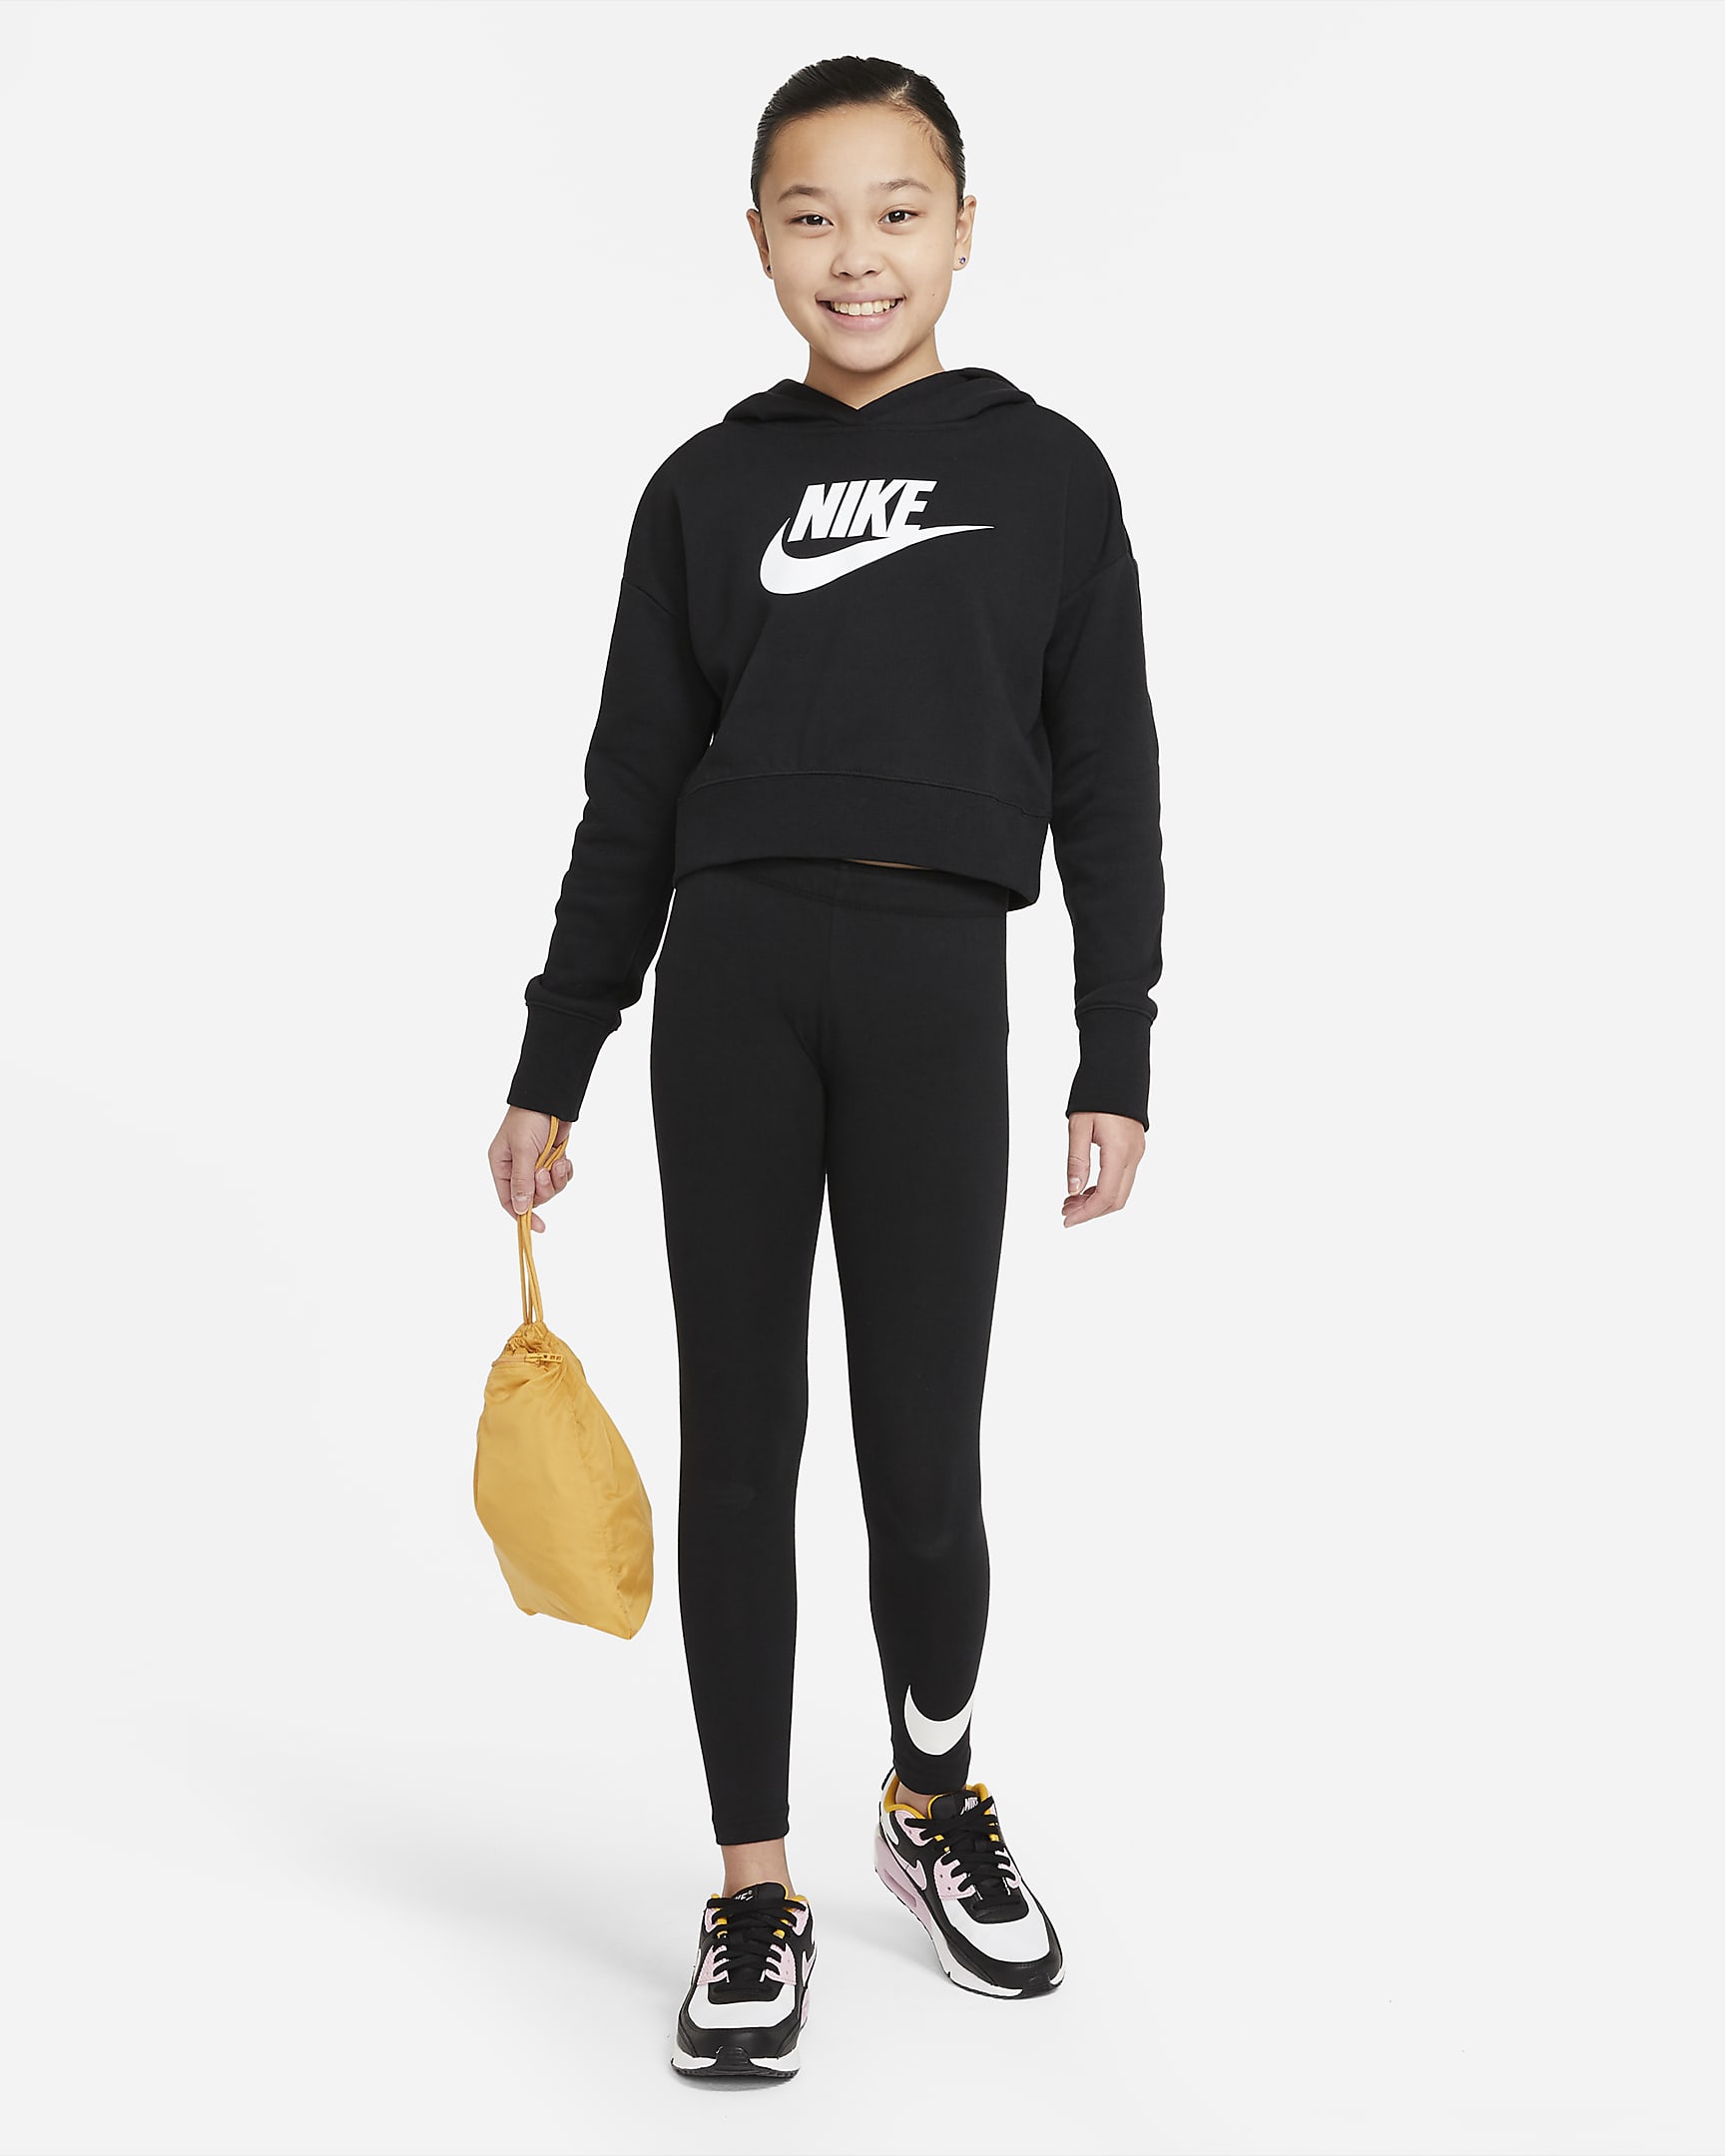 Nike Big Kids' (Girls') Convertible Cargo Skirt. Nike.com